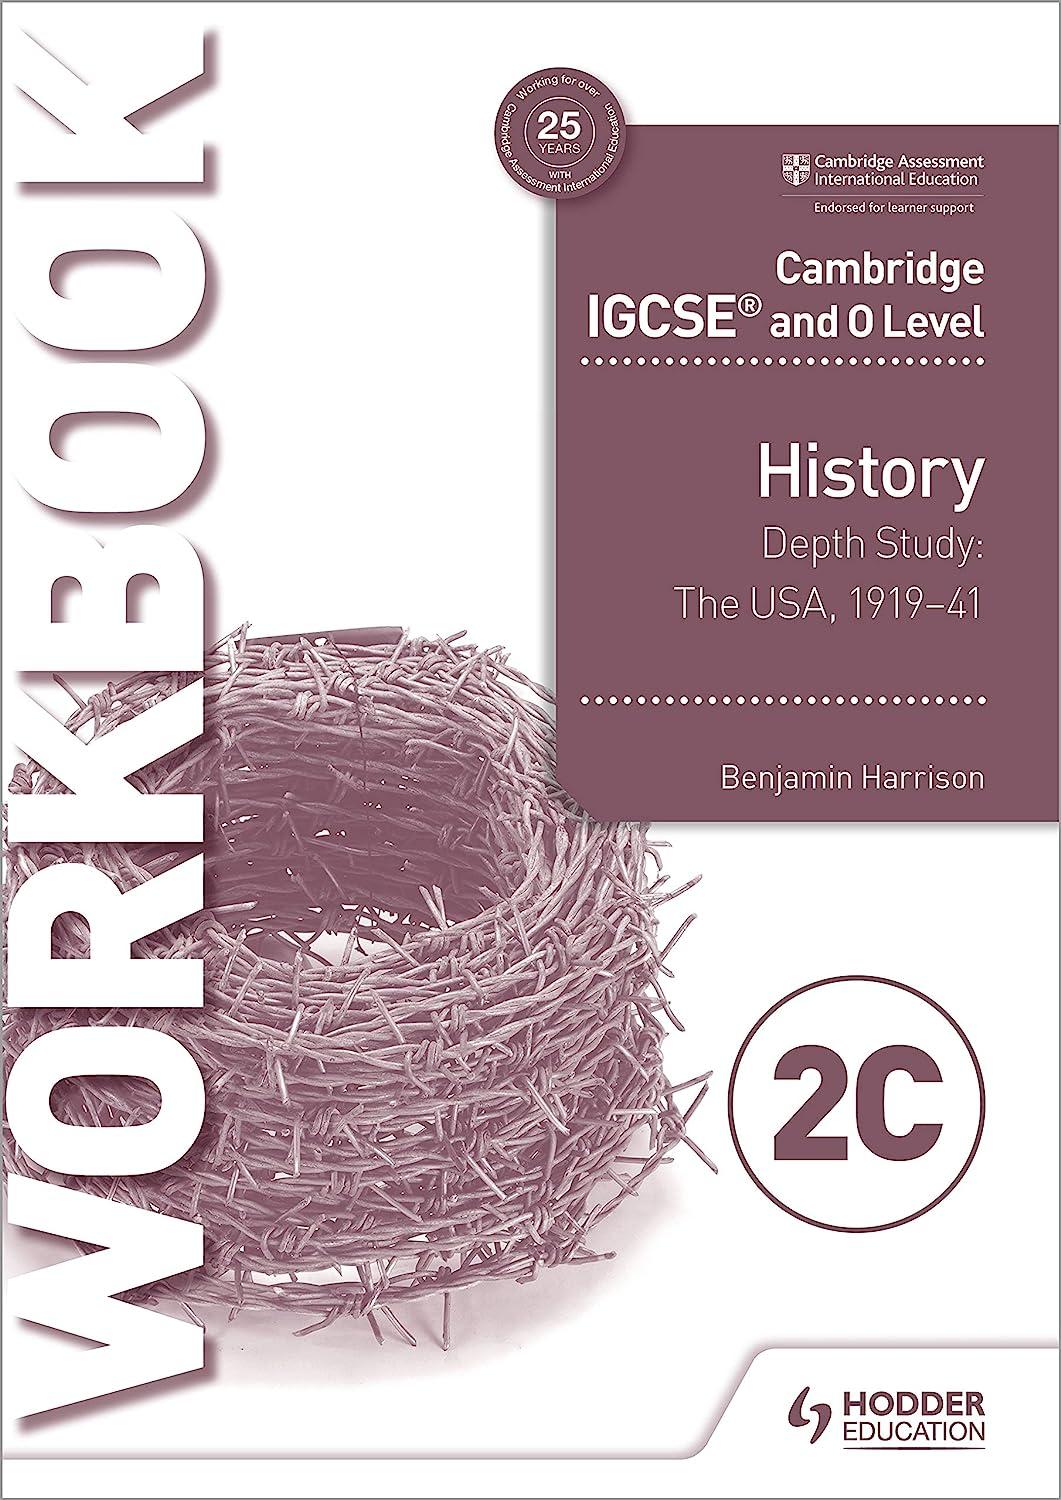 cambridge igcse and o level history workbook 2c 1st edition benjamin harrison 1510448586, 978-1510448582